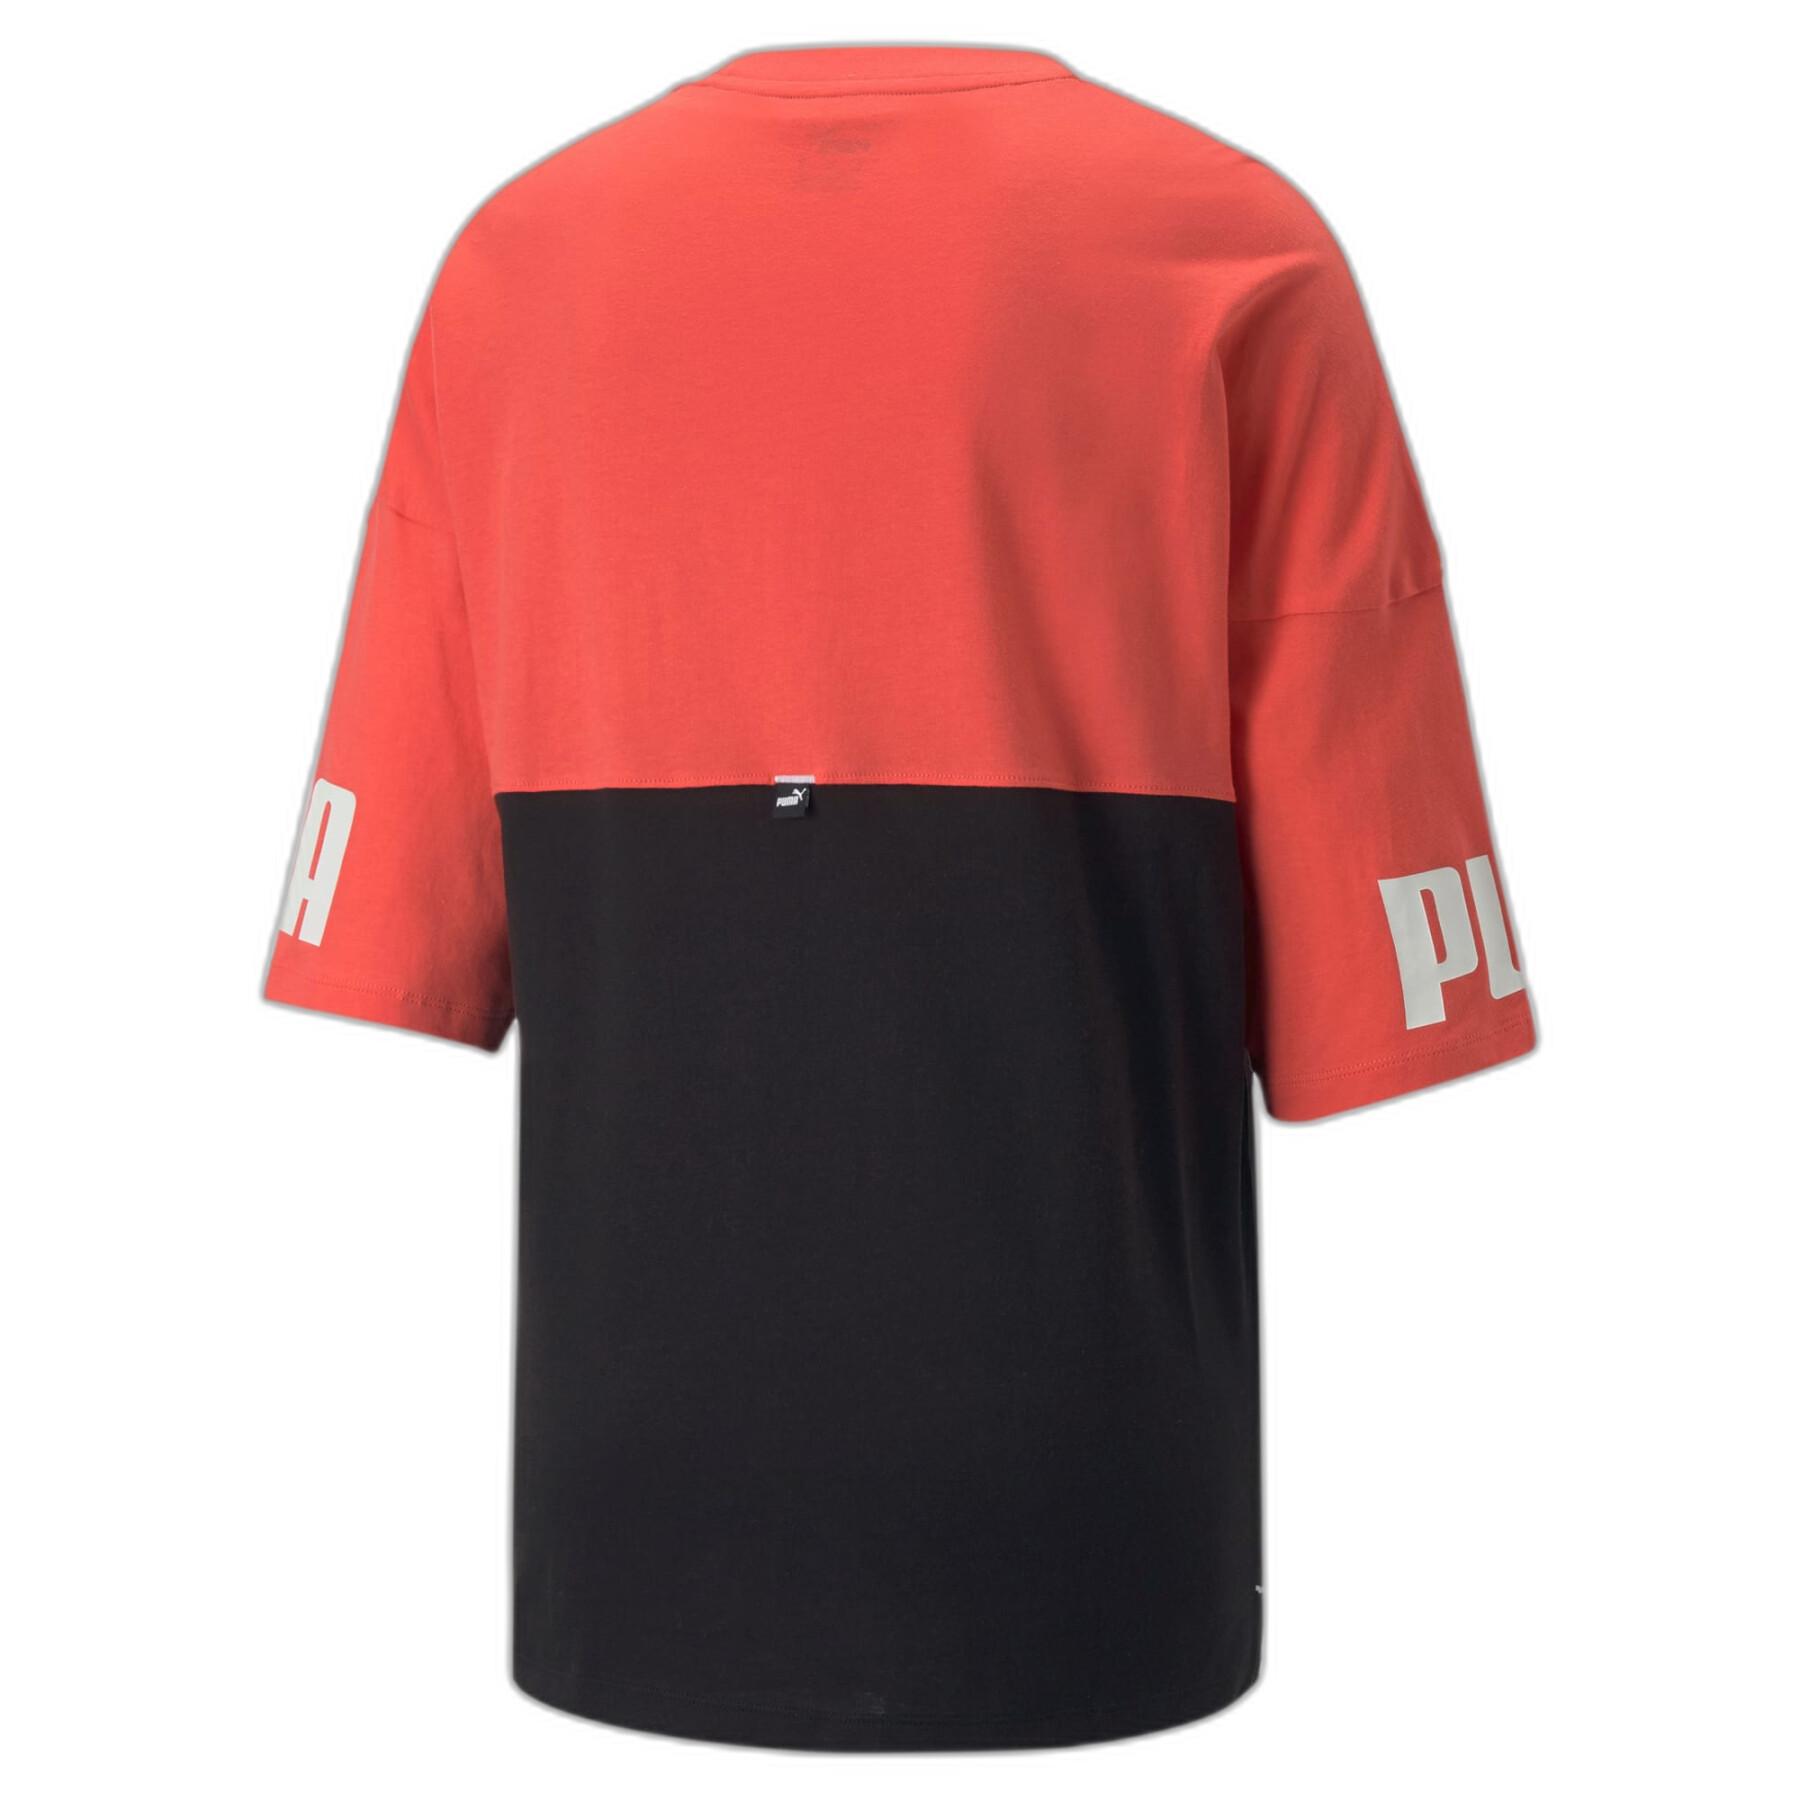 Women's T-shirt Puma Power Colorblock - Polos & T-shirts - Women's clothing  - Lifestyle